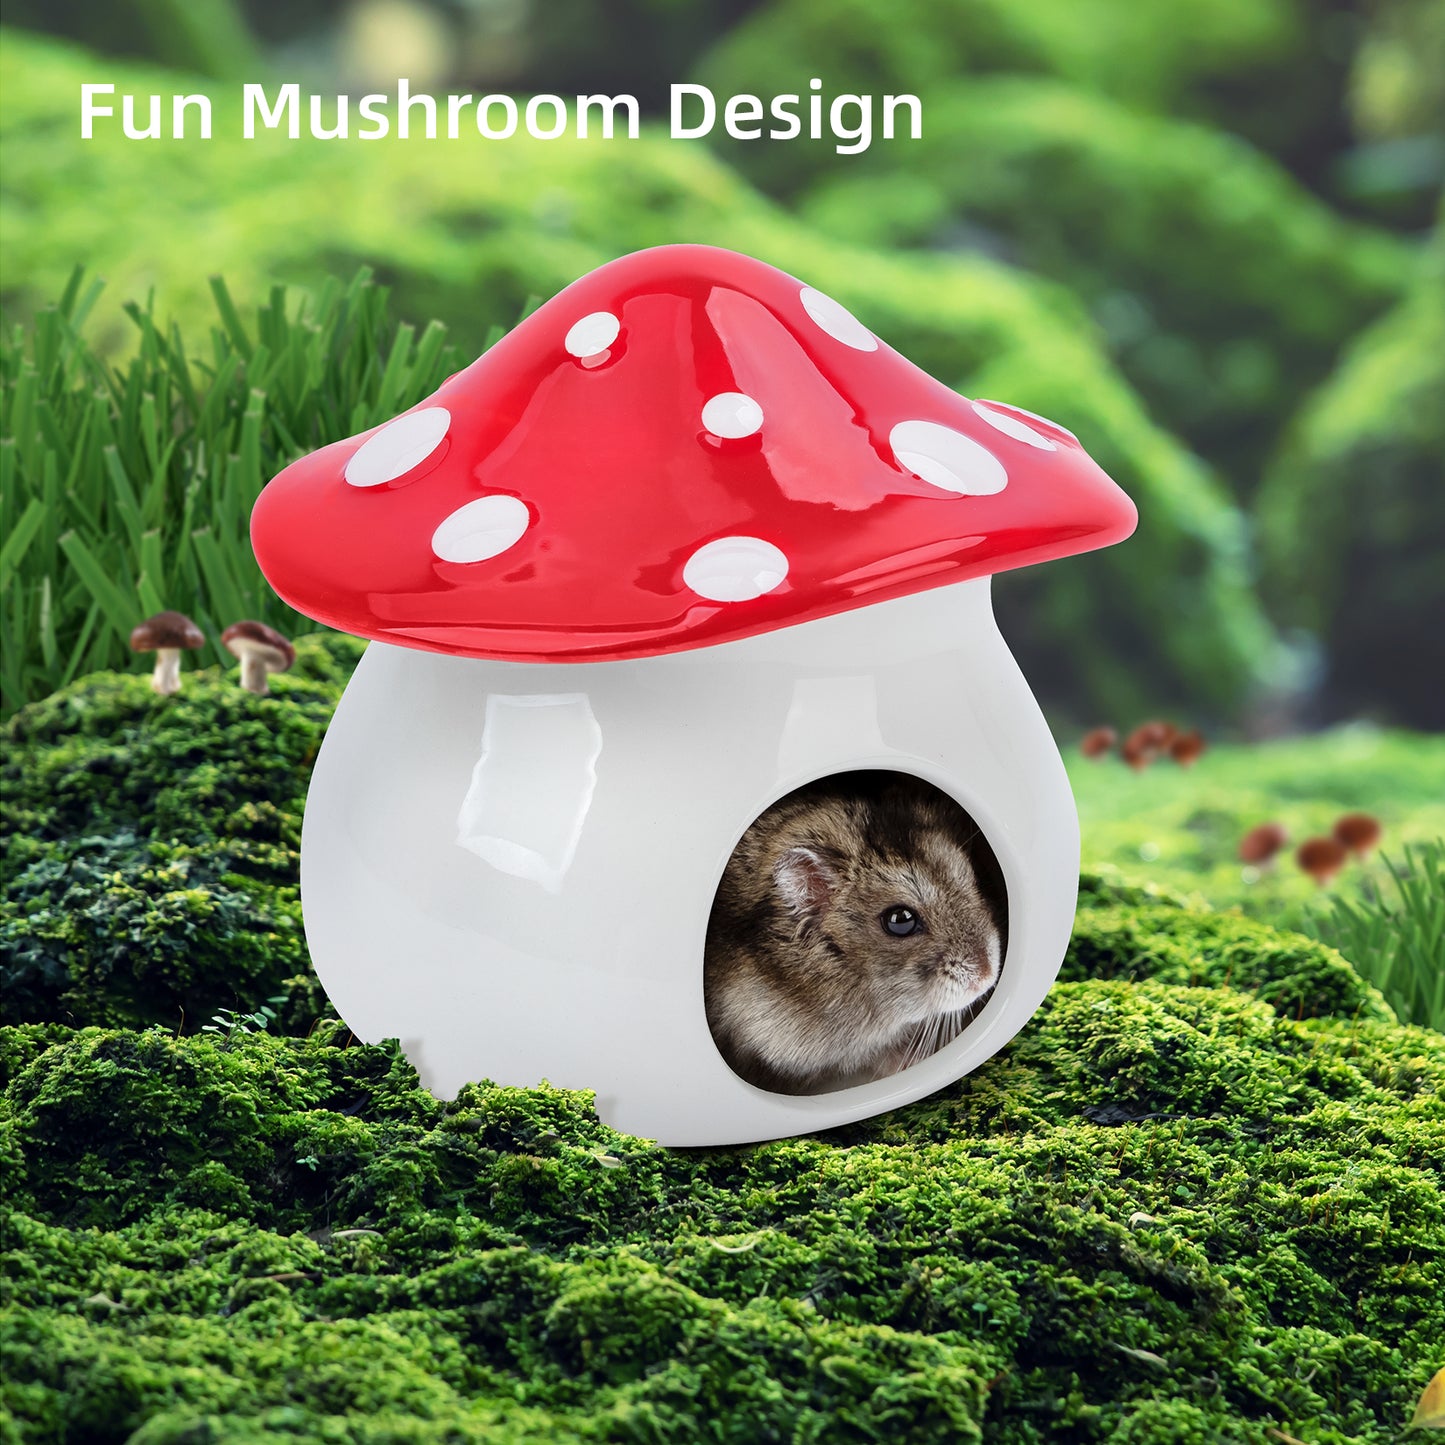 Niteangel Ceramic Hamster Habitat Hideout (Mushroom-Shaped)